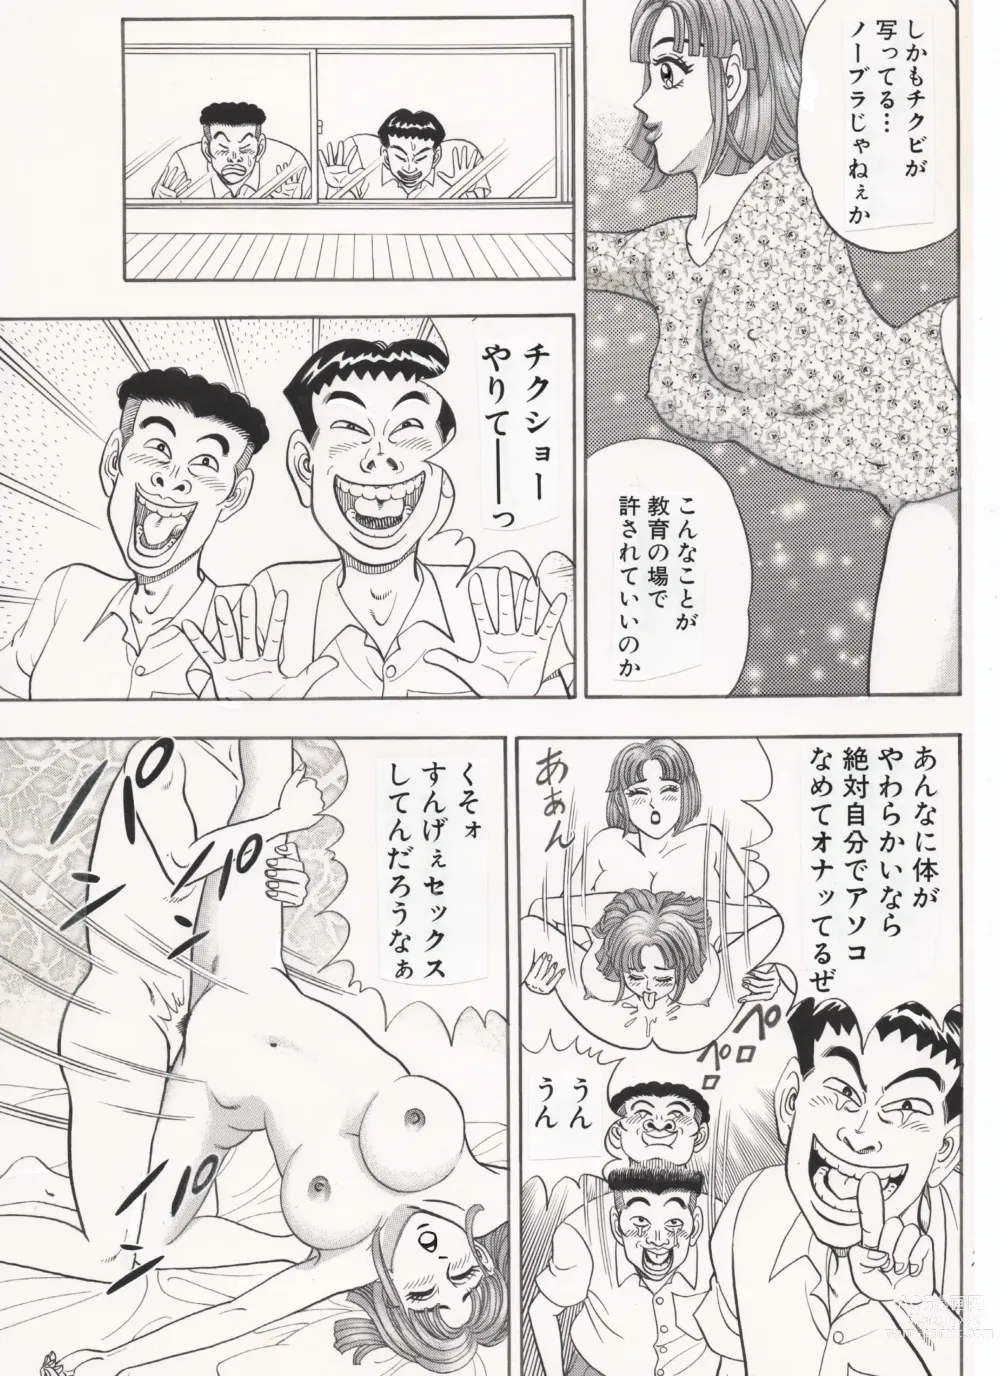 Page 7 of doujinshi Taisou Joshi… Midareru.